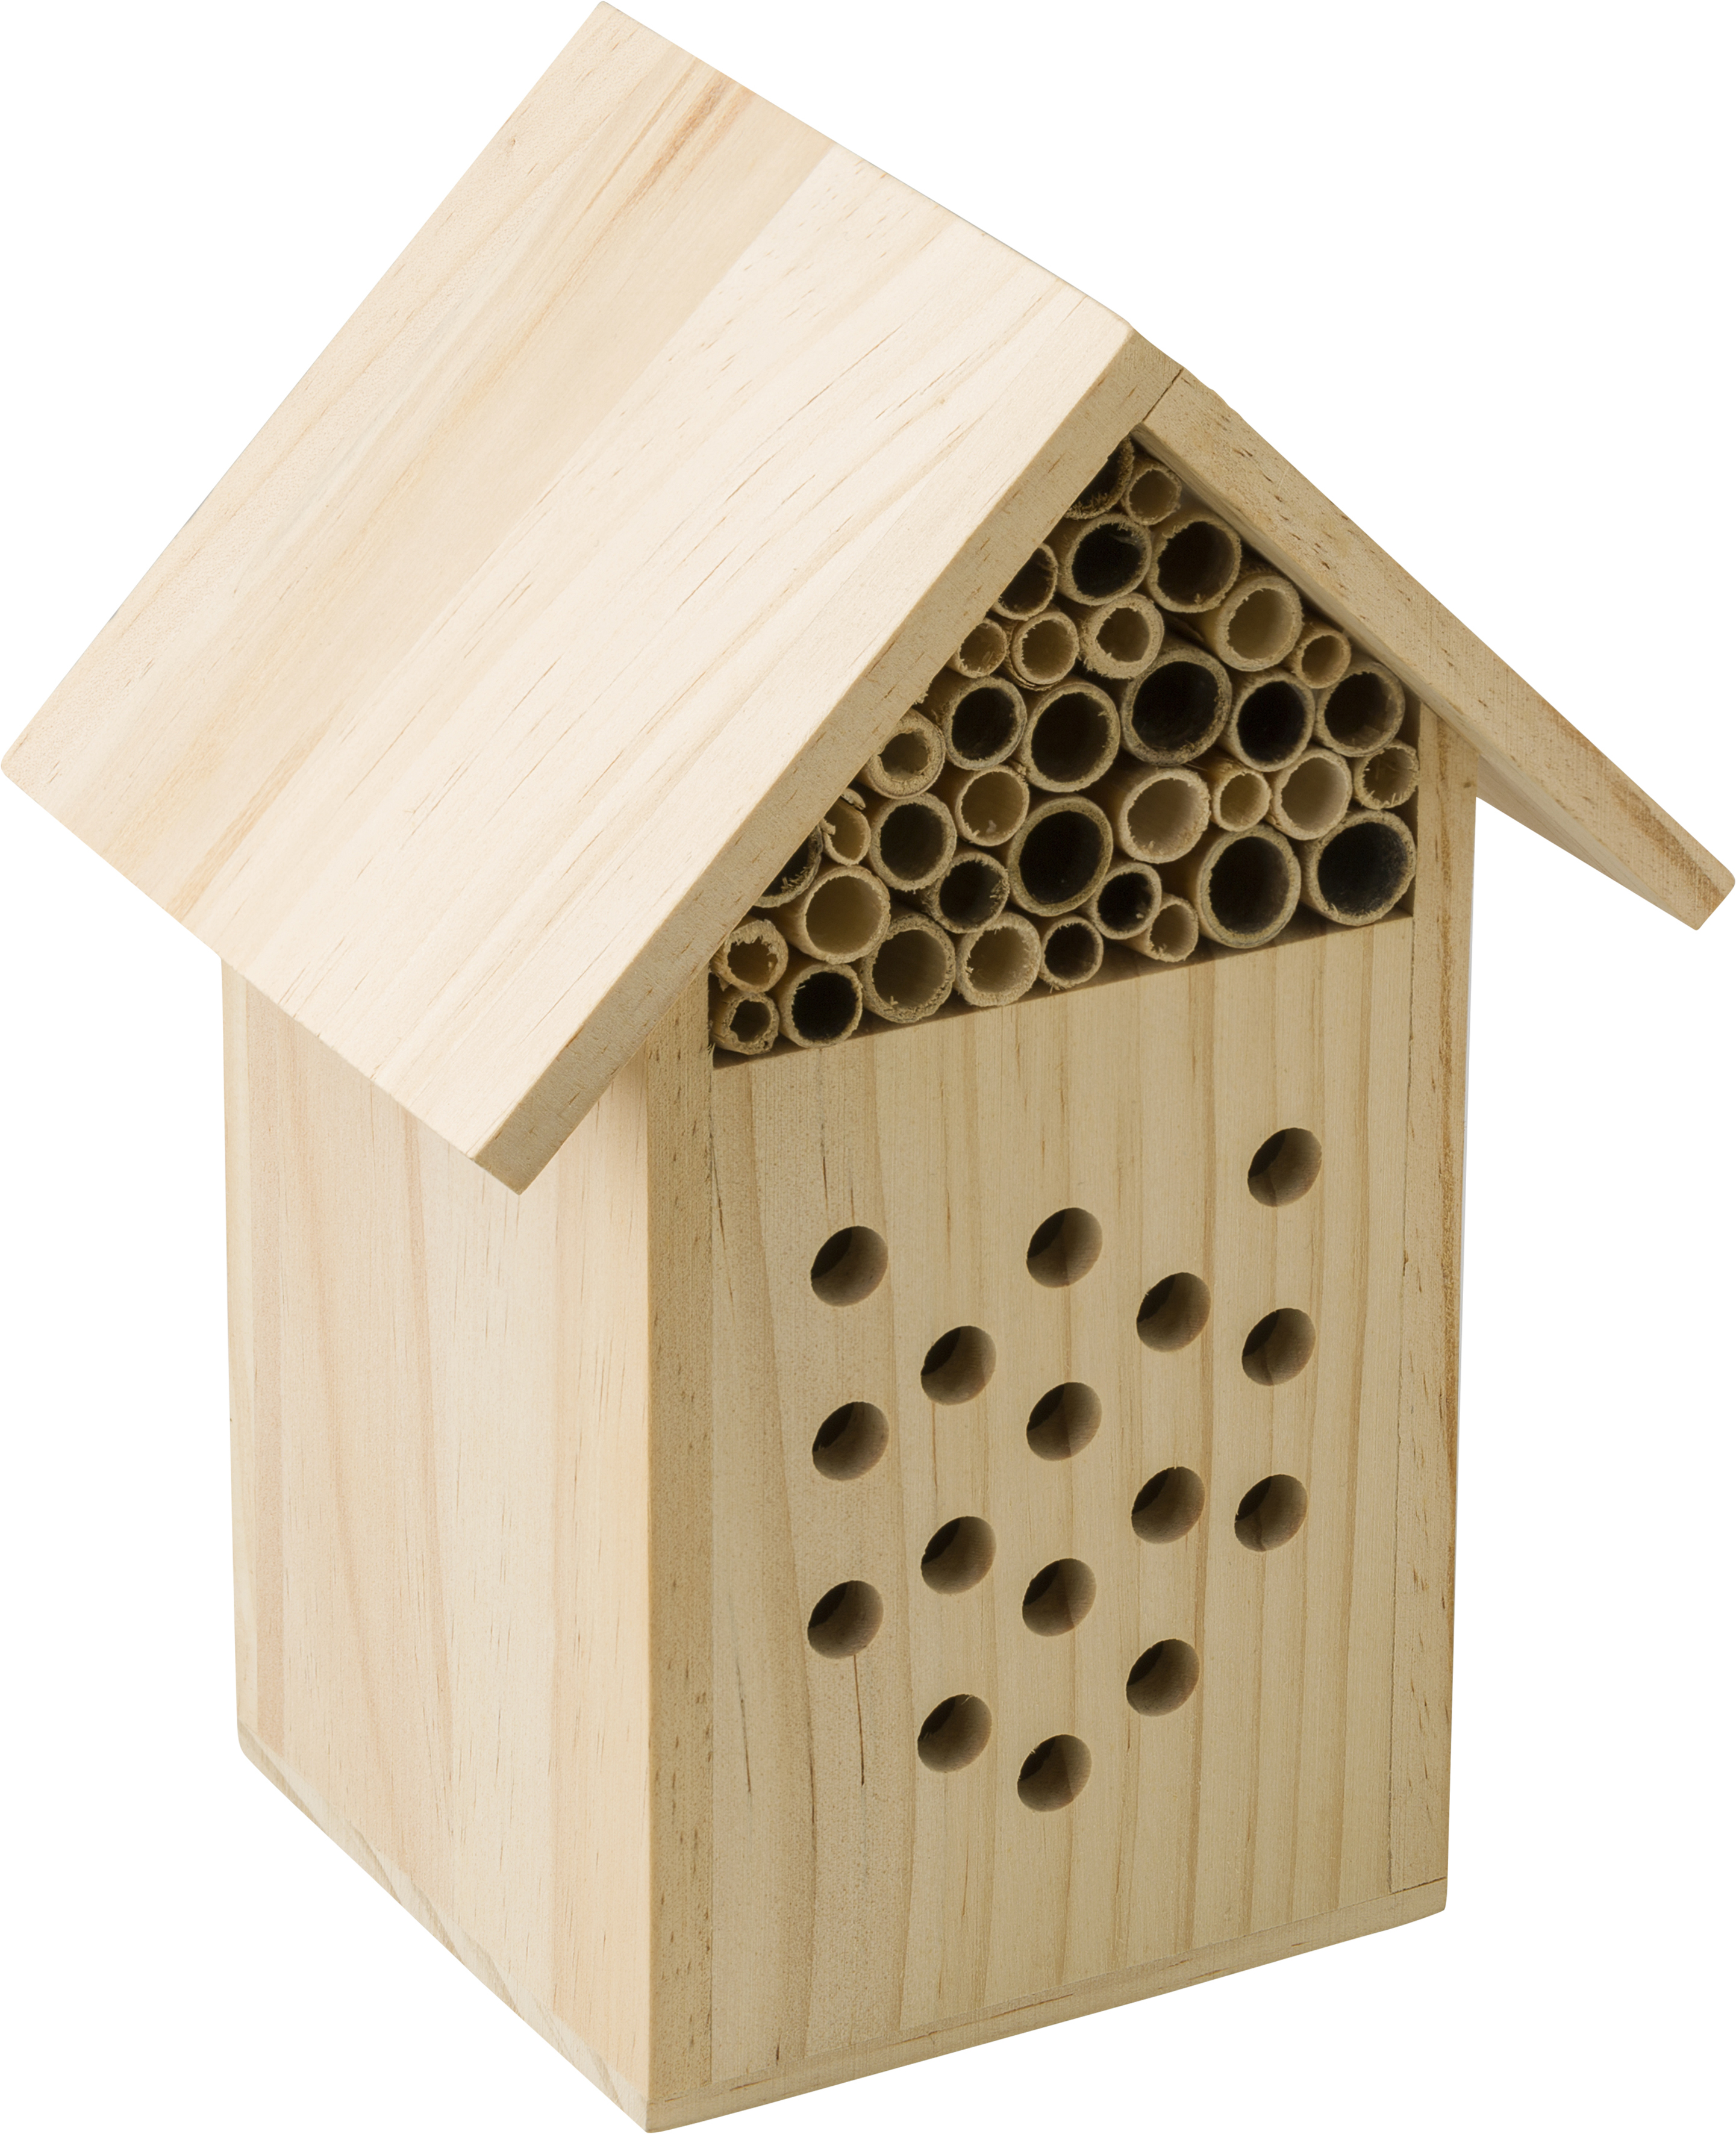 000000737168 011999999 3d135 lft pro01 2022 fal - Wooden bee house